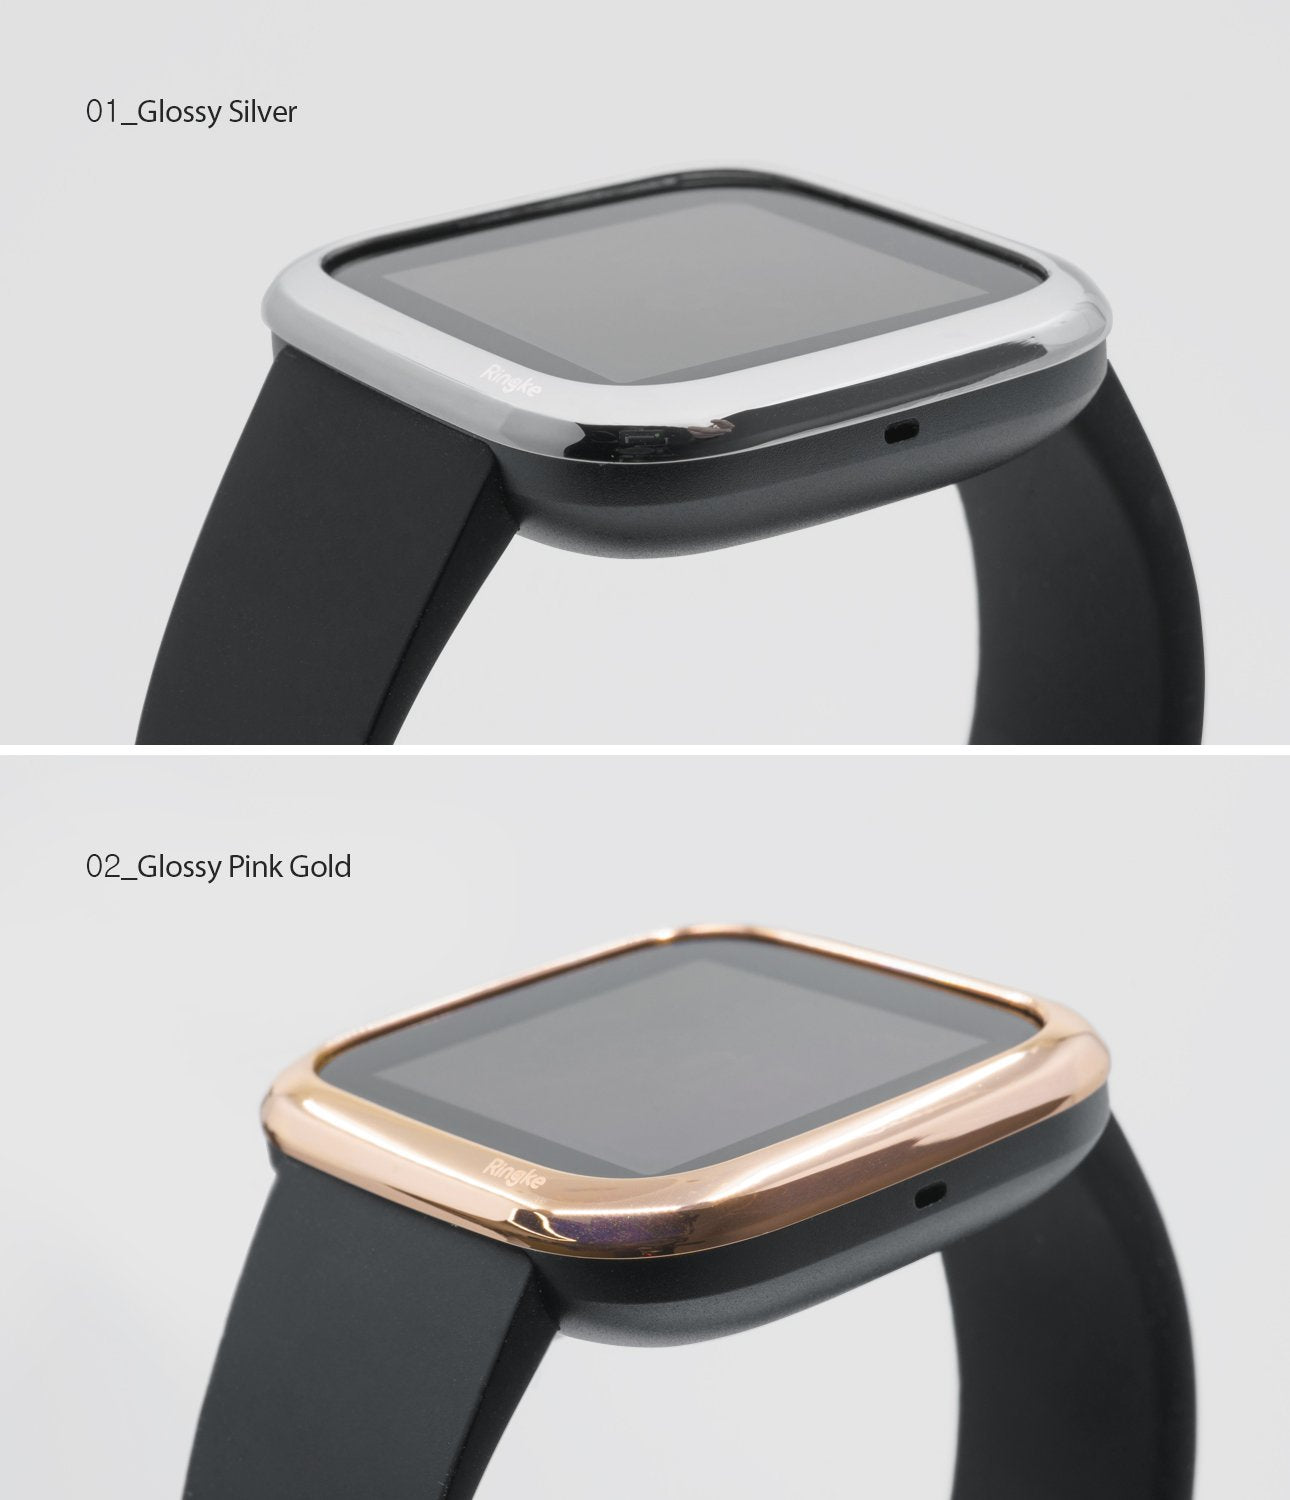 Ringke Bezel Styling Fitbit Versa 2, Full Stainless Steel Frame, Rose Gold, Stainless Steel, 2-02 ST, glossy silver, rose gold